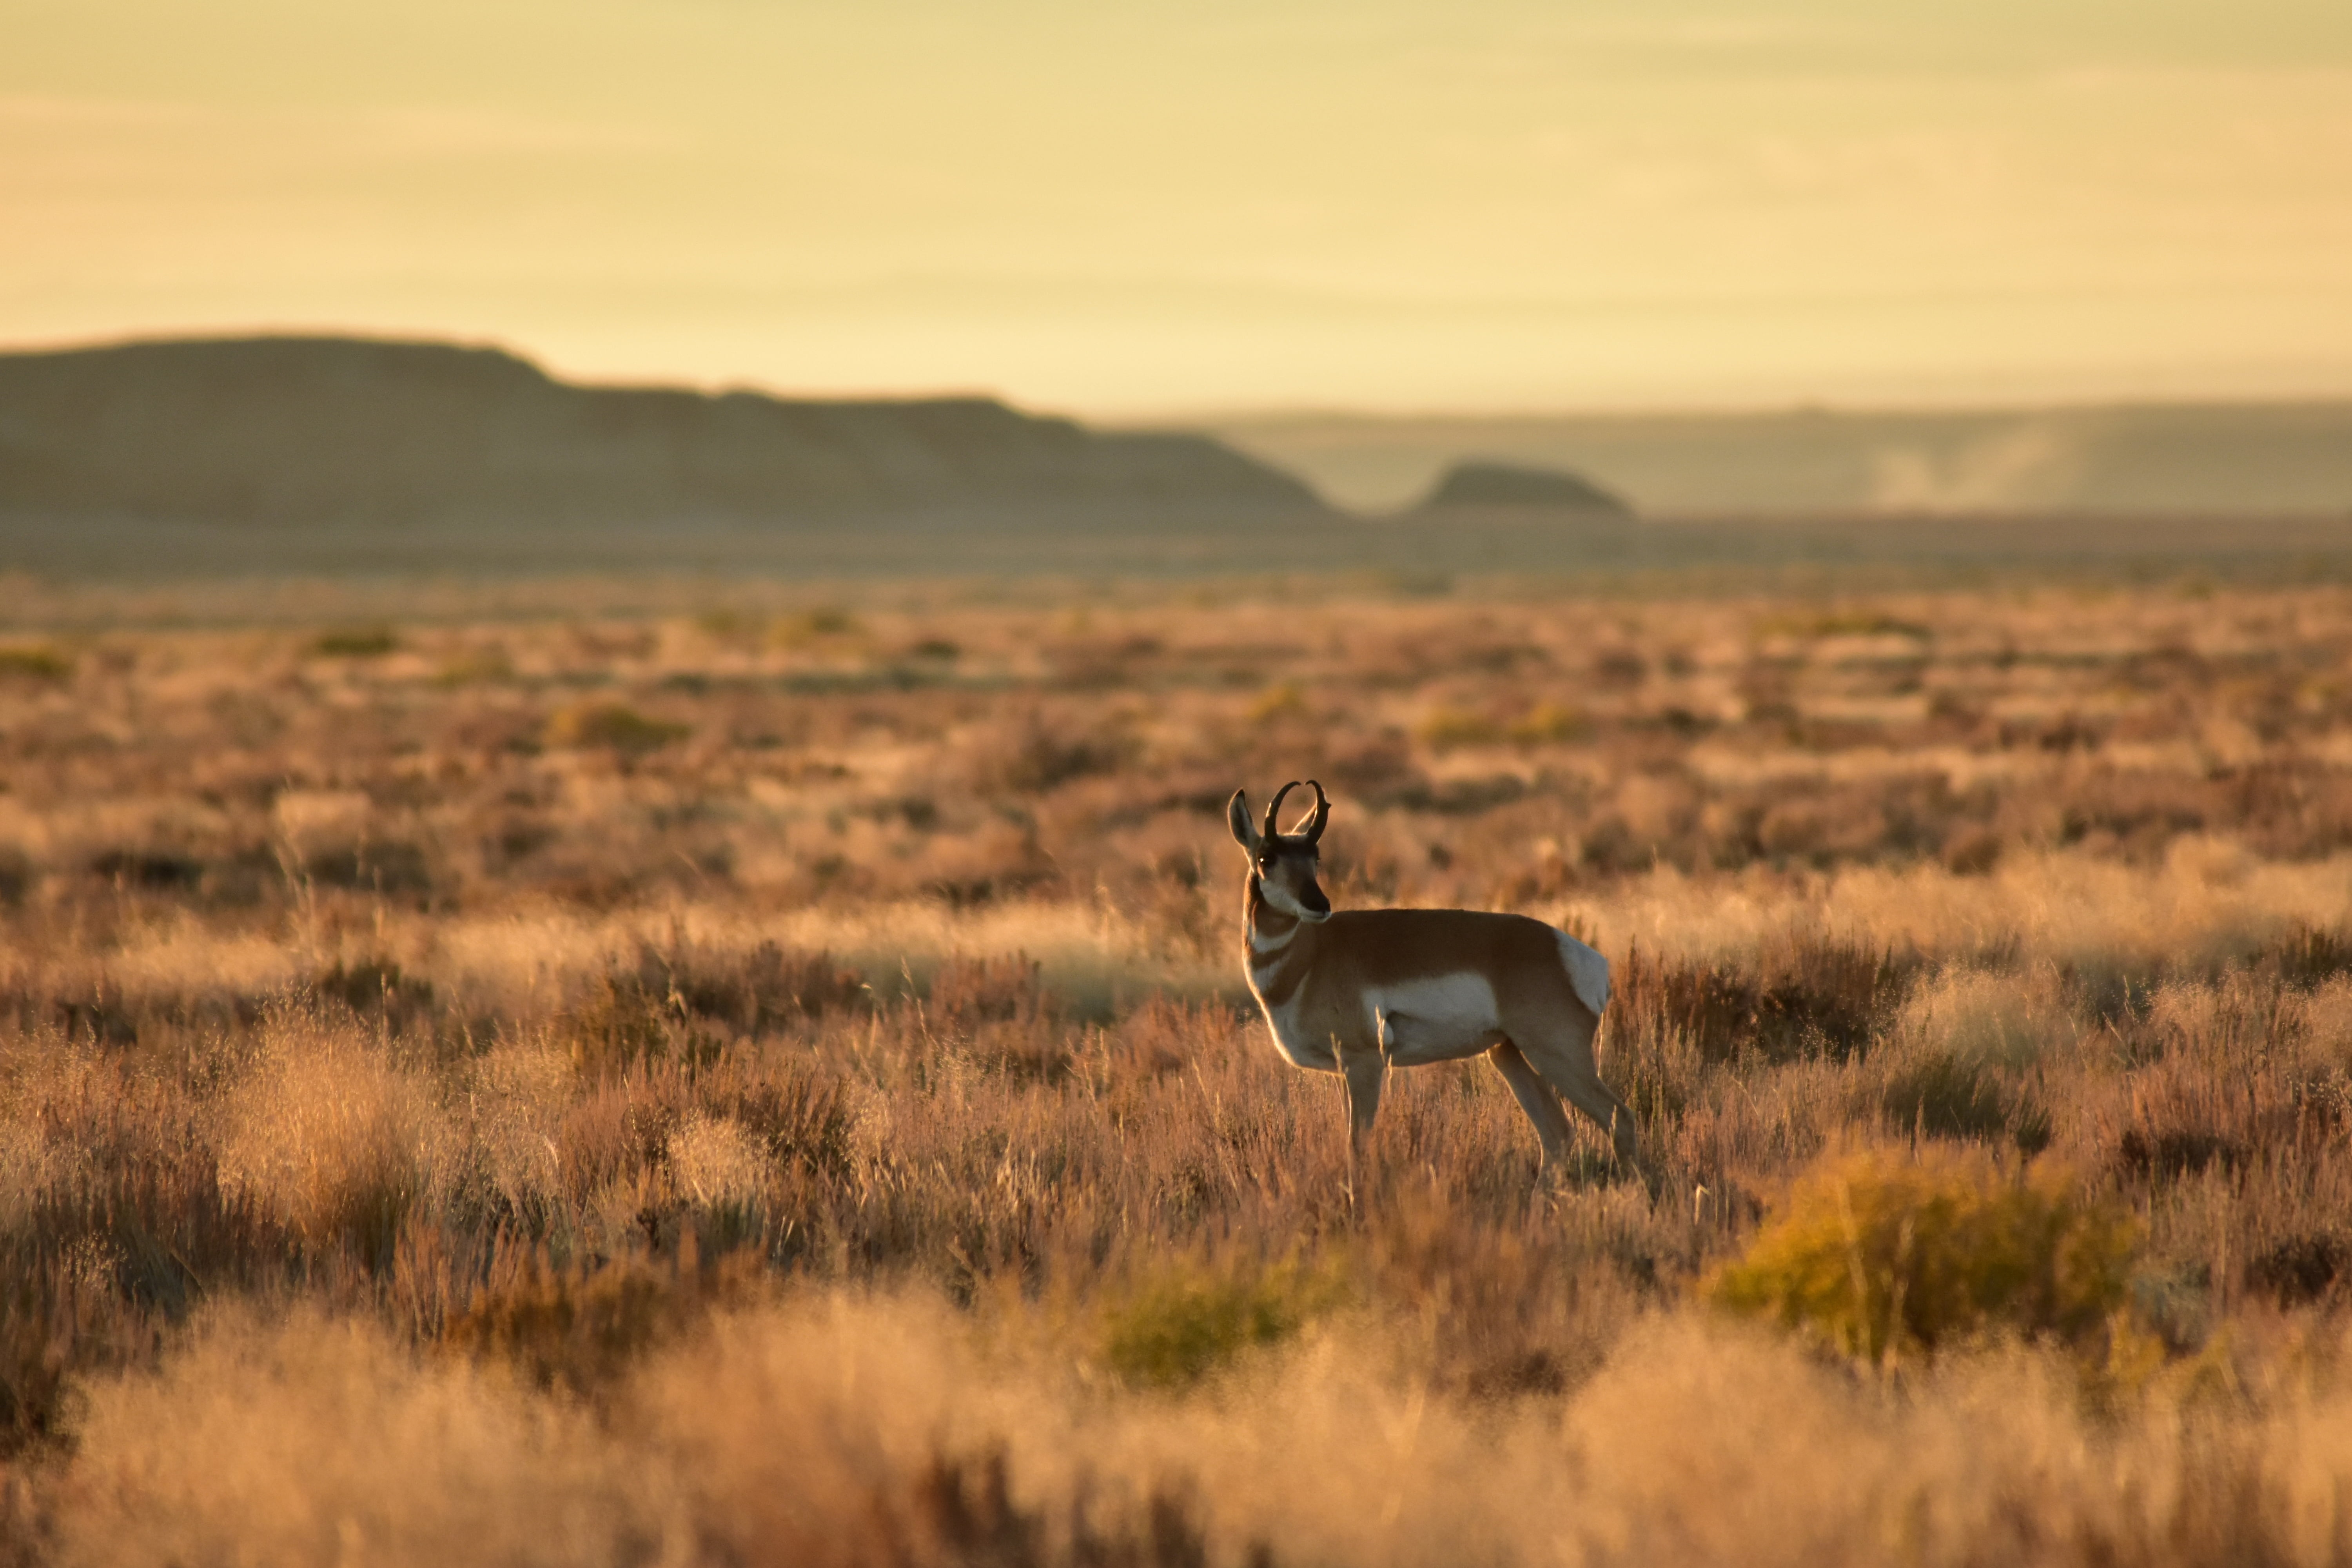 depth of field photography of deer on grass field during daytime, seedskadee national wildlife refuge